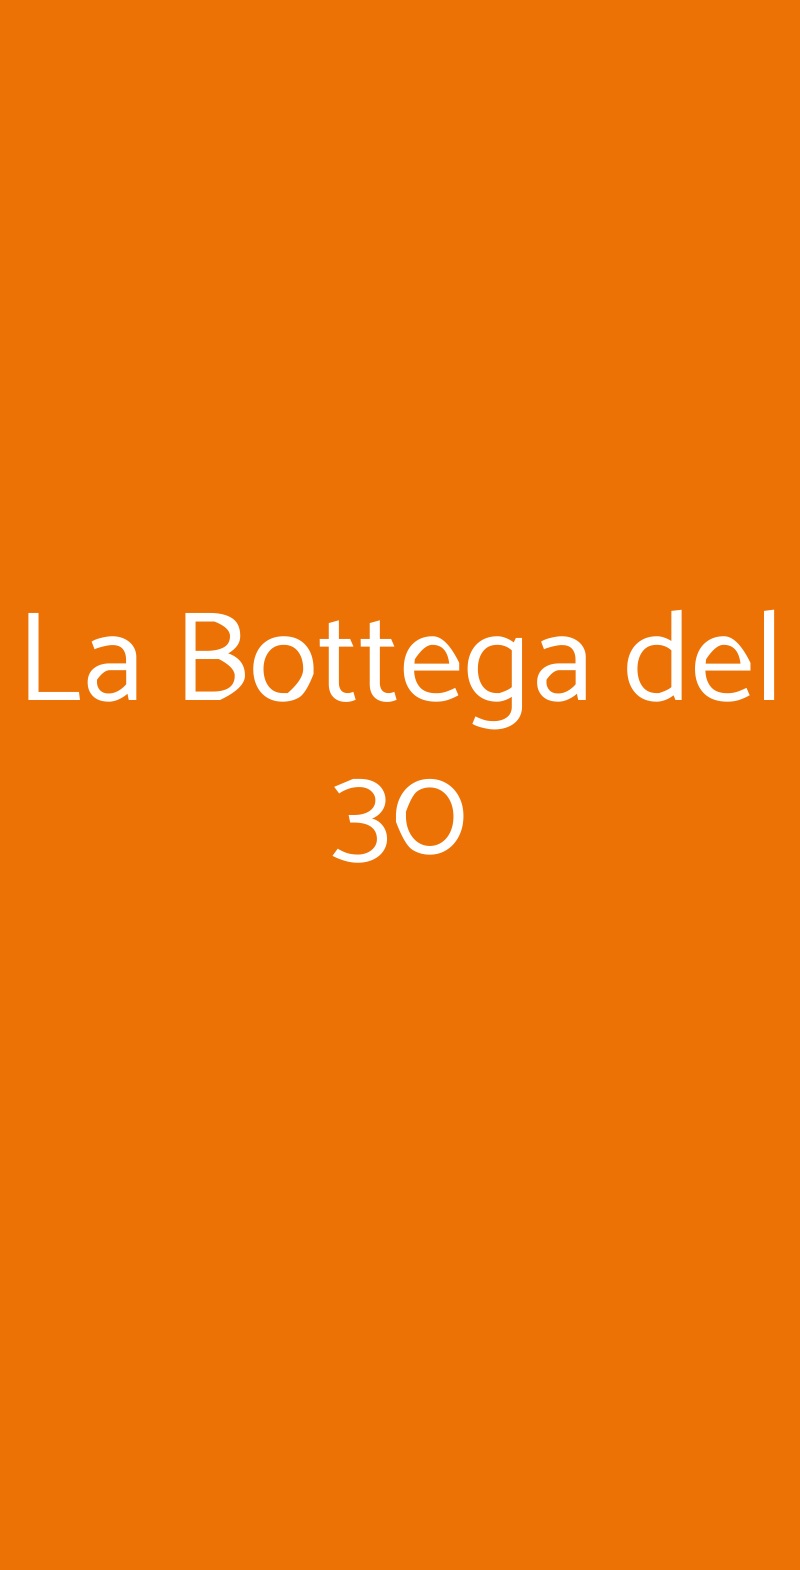 La Bottega del 30 Castelnuovo Berardenga menù 1 pagina